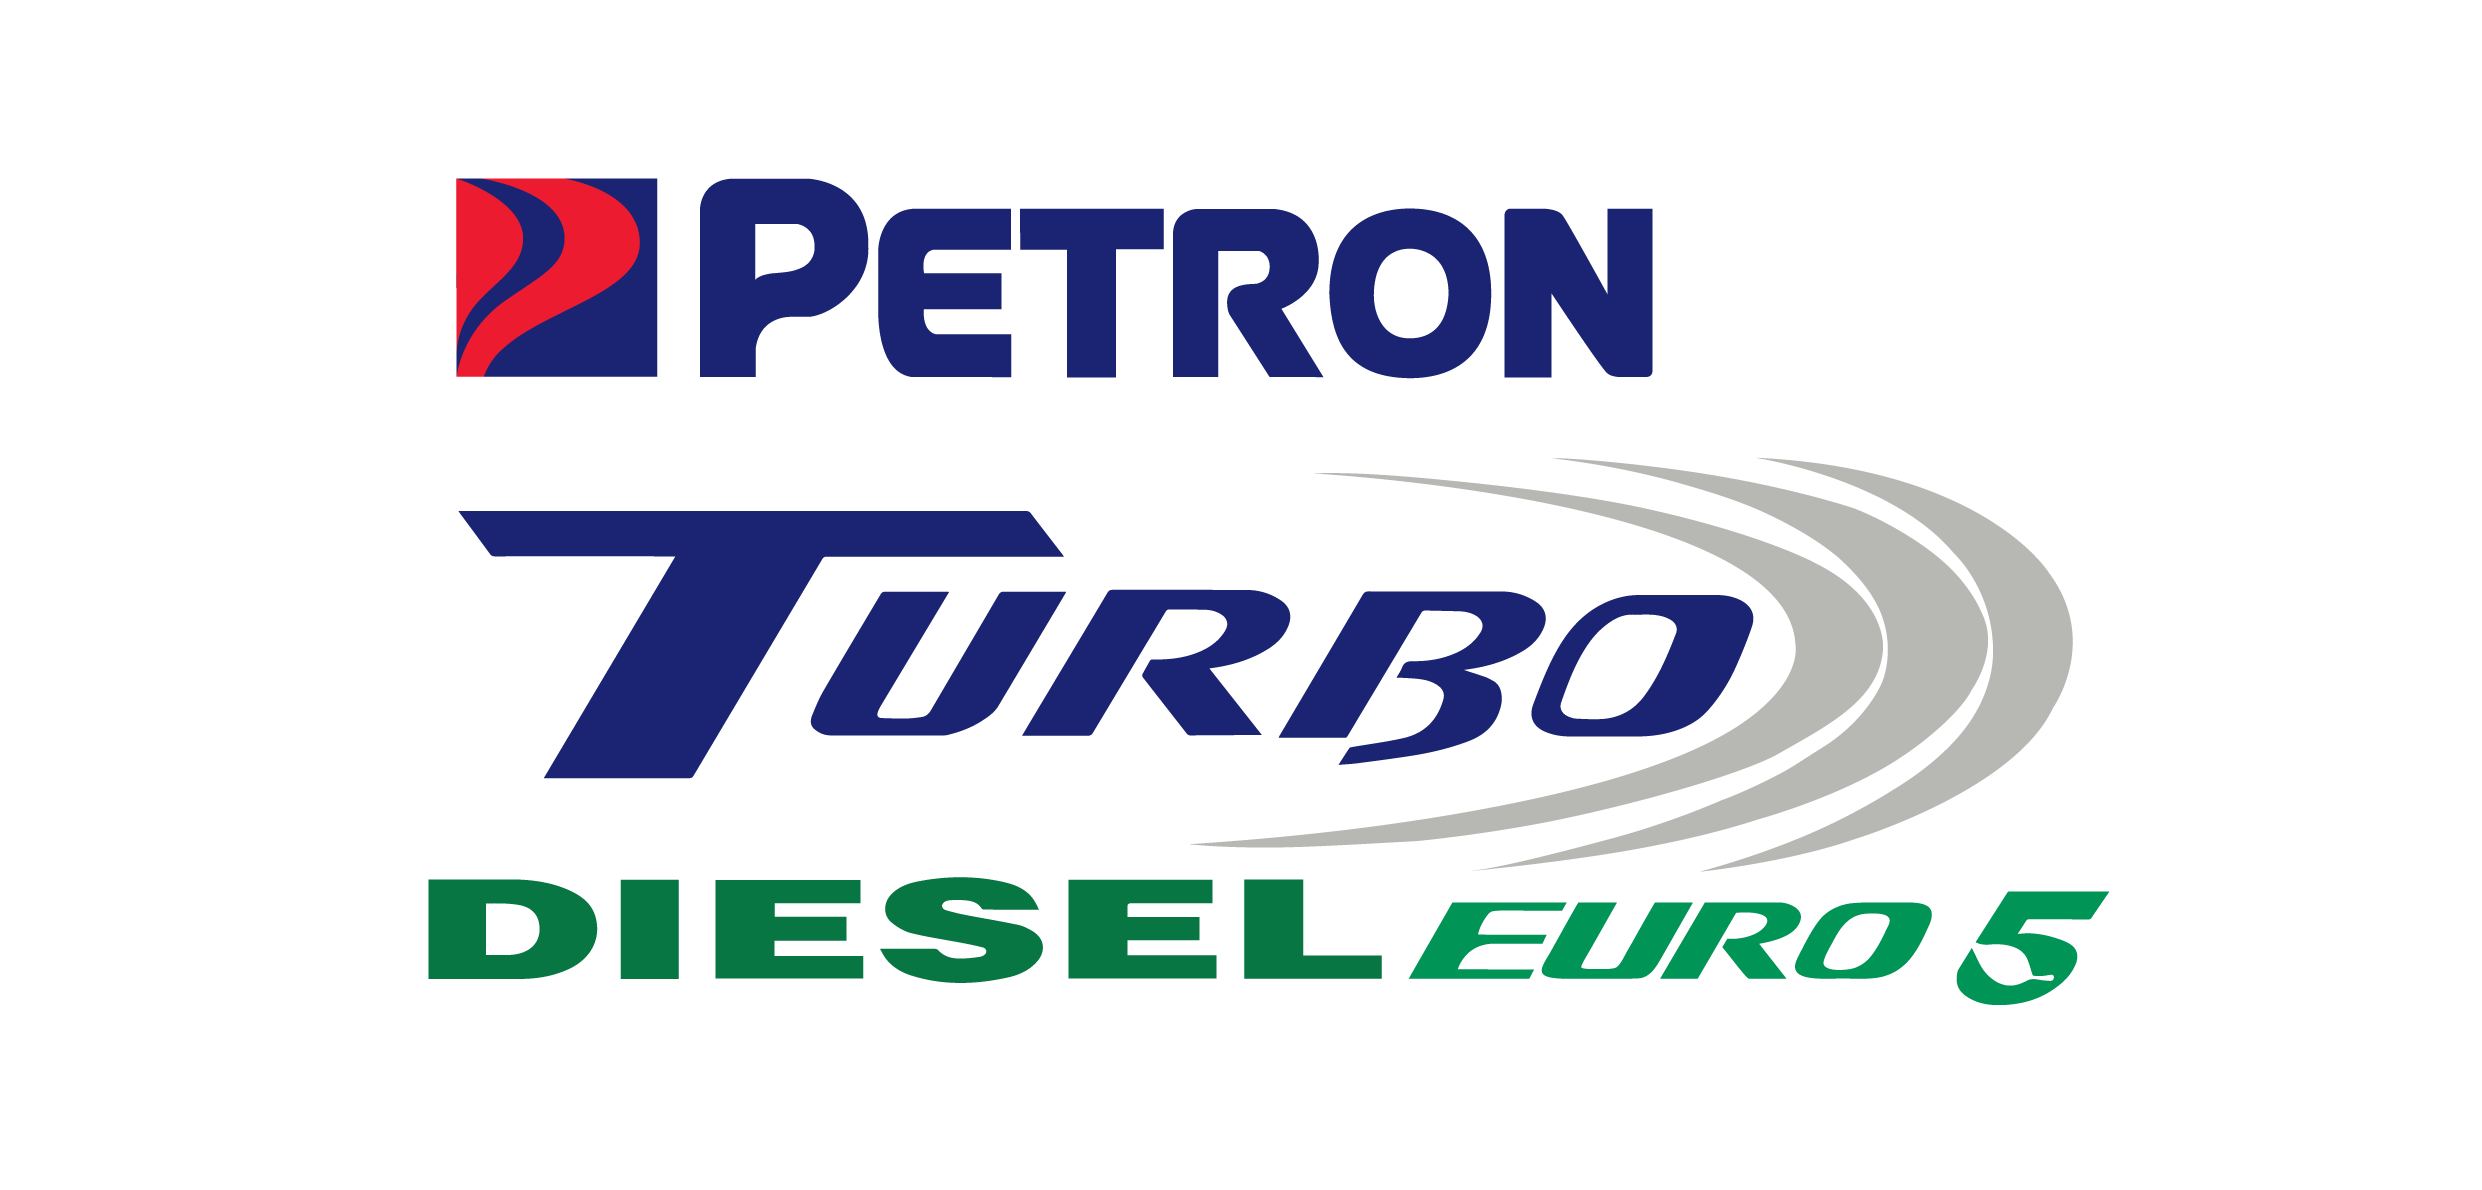 Petron Turbo Diesel Euro 5